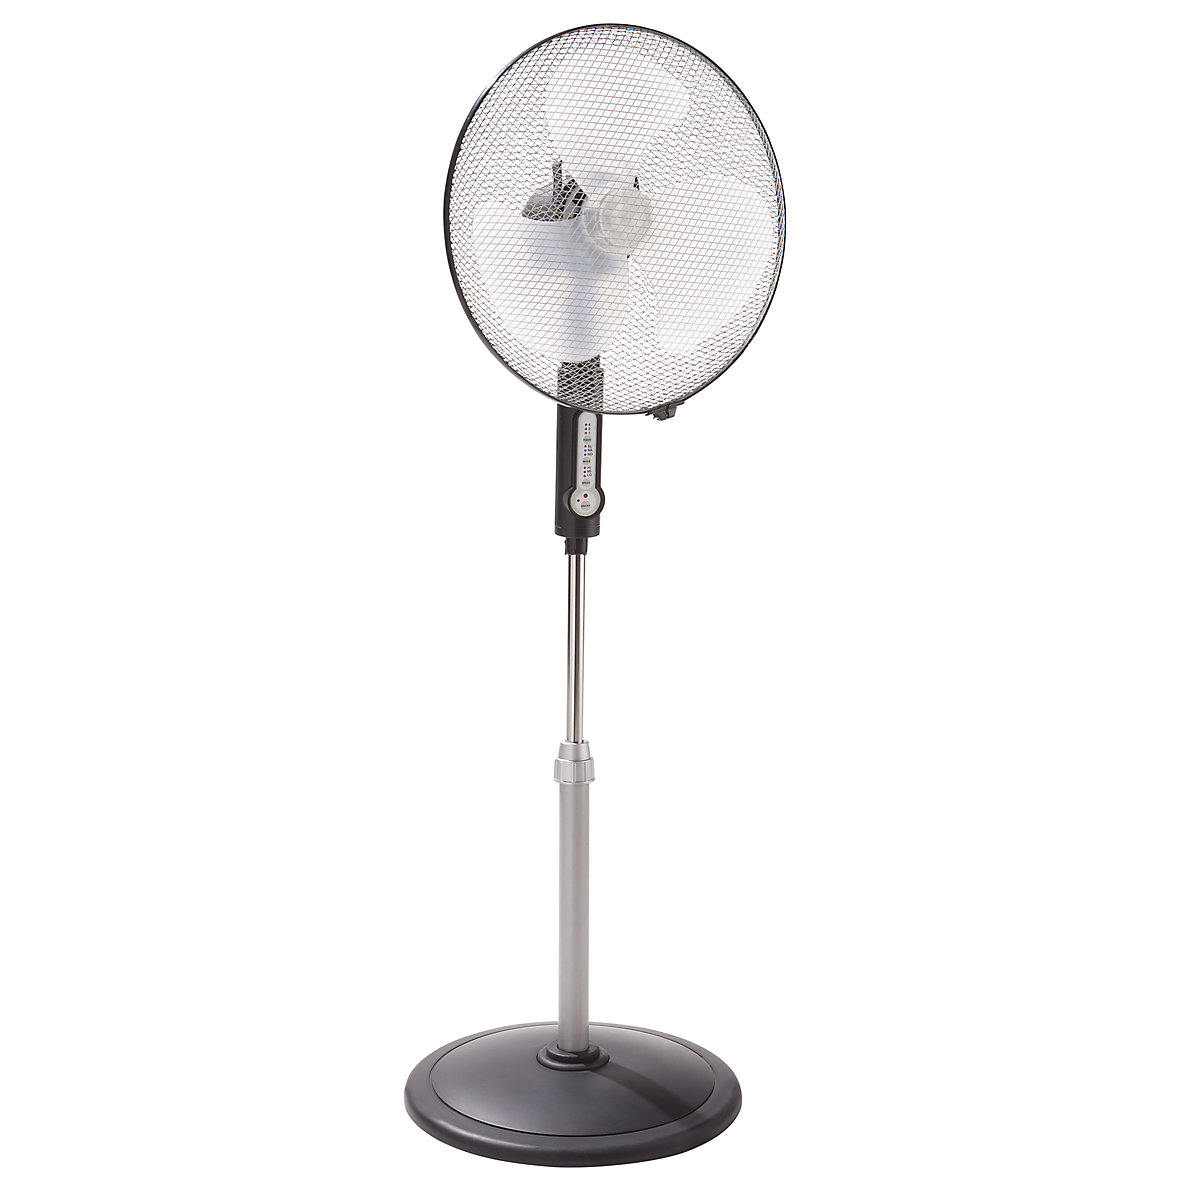 Pedestal fan with remote control